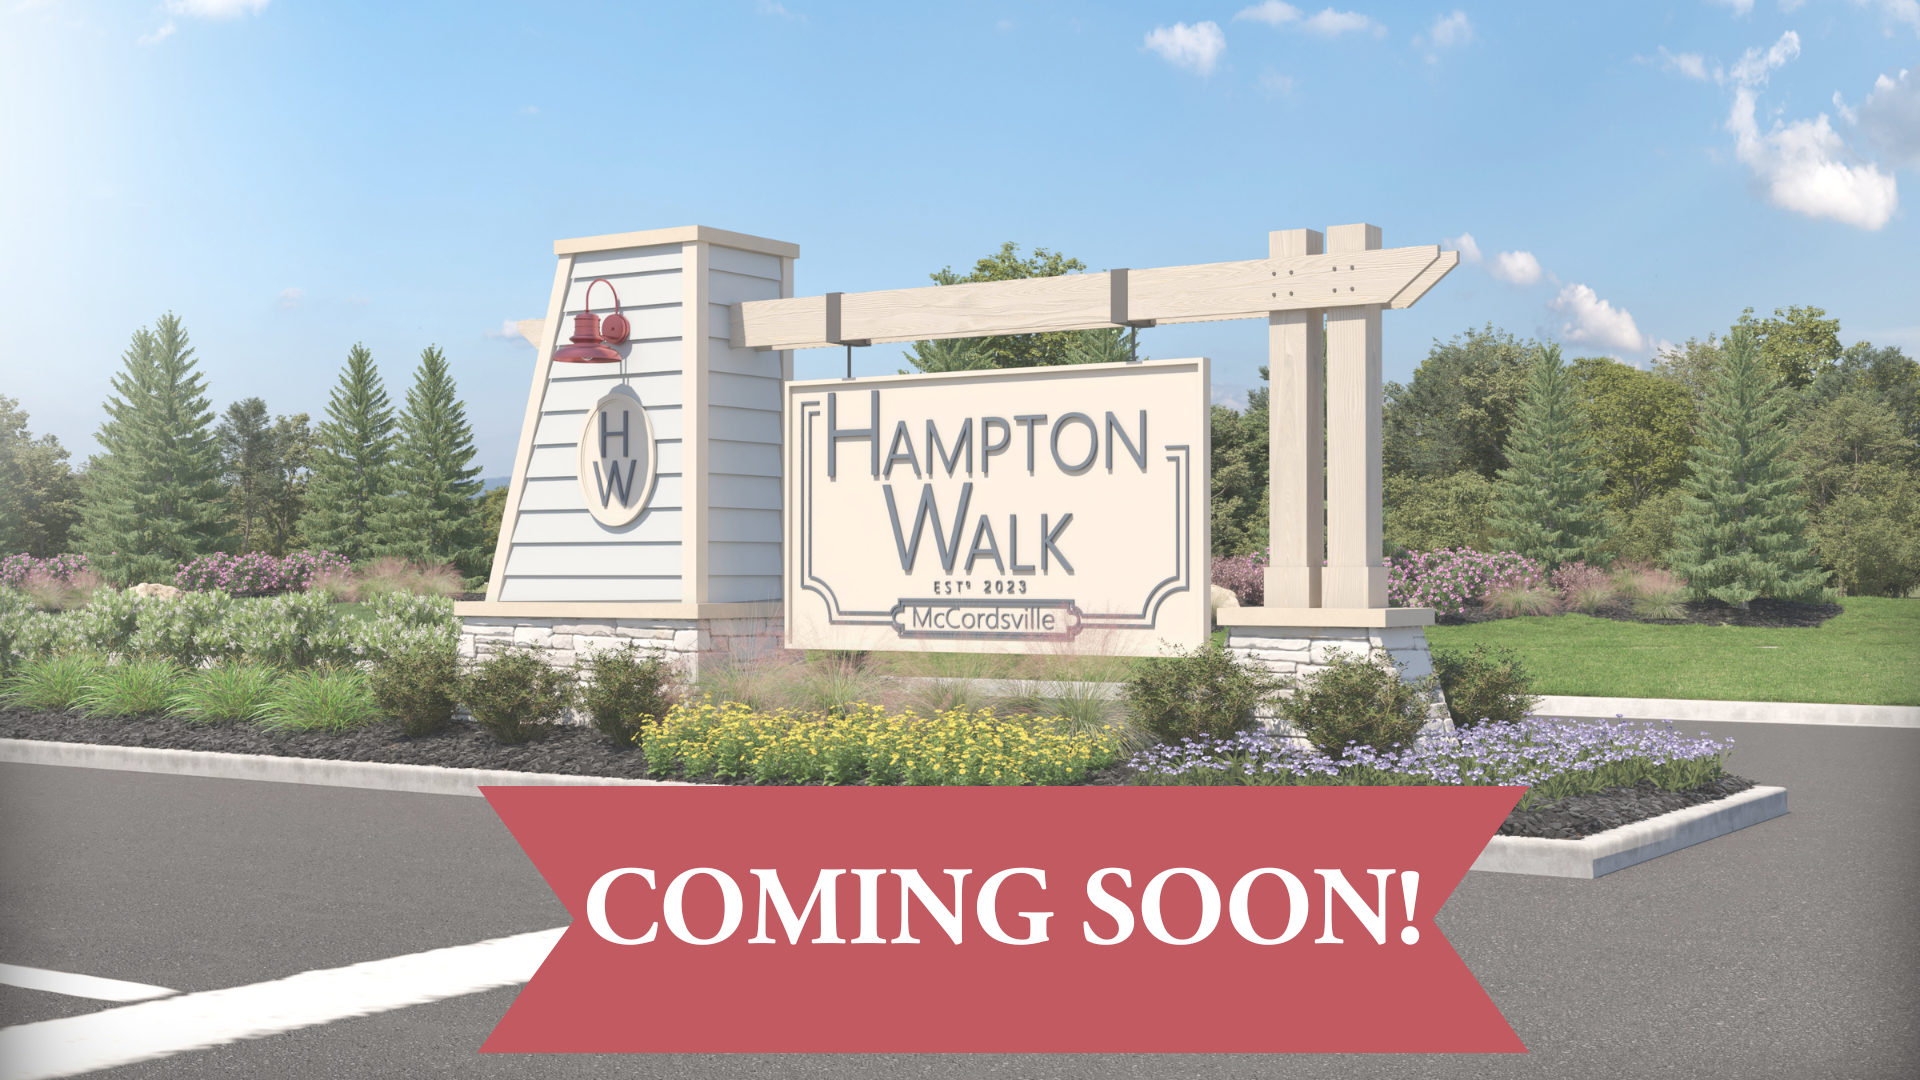 Hampton Walk Coming Soon to McCordsville, Indiana!